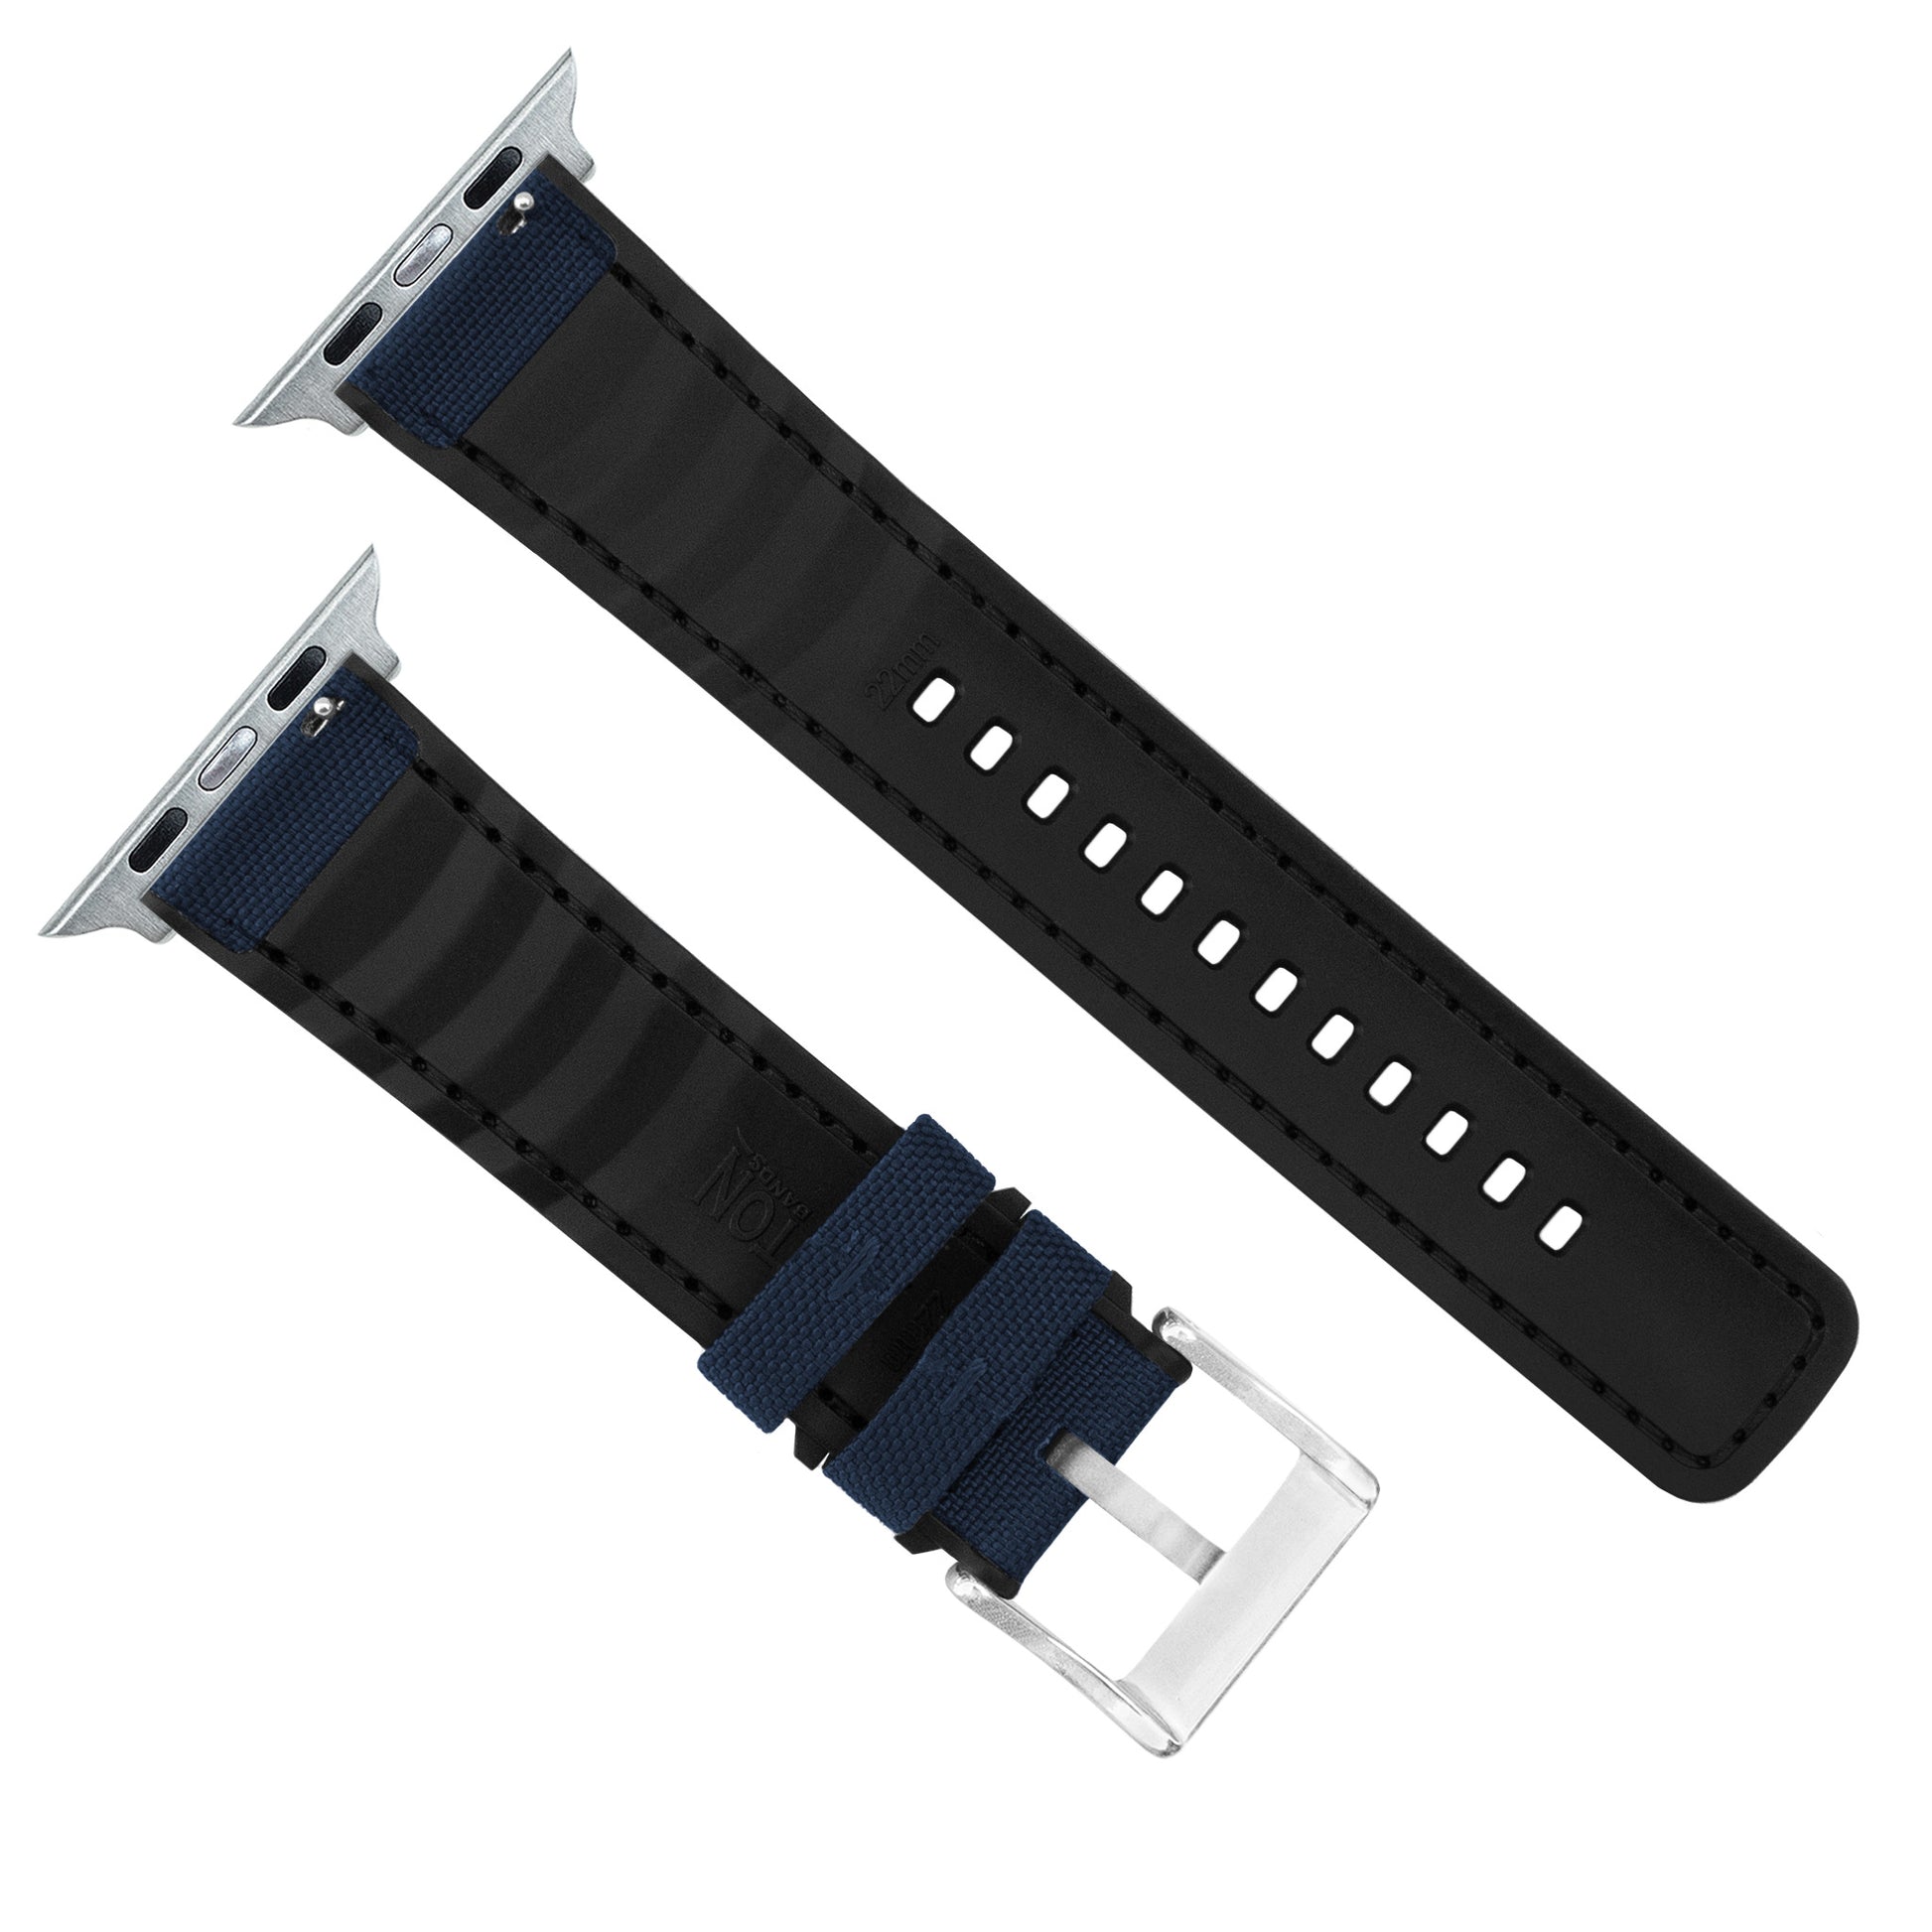 Barton Cordura Fabric and Silicone Hybrid Watch Band